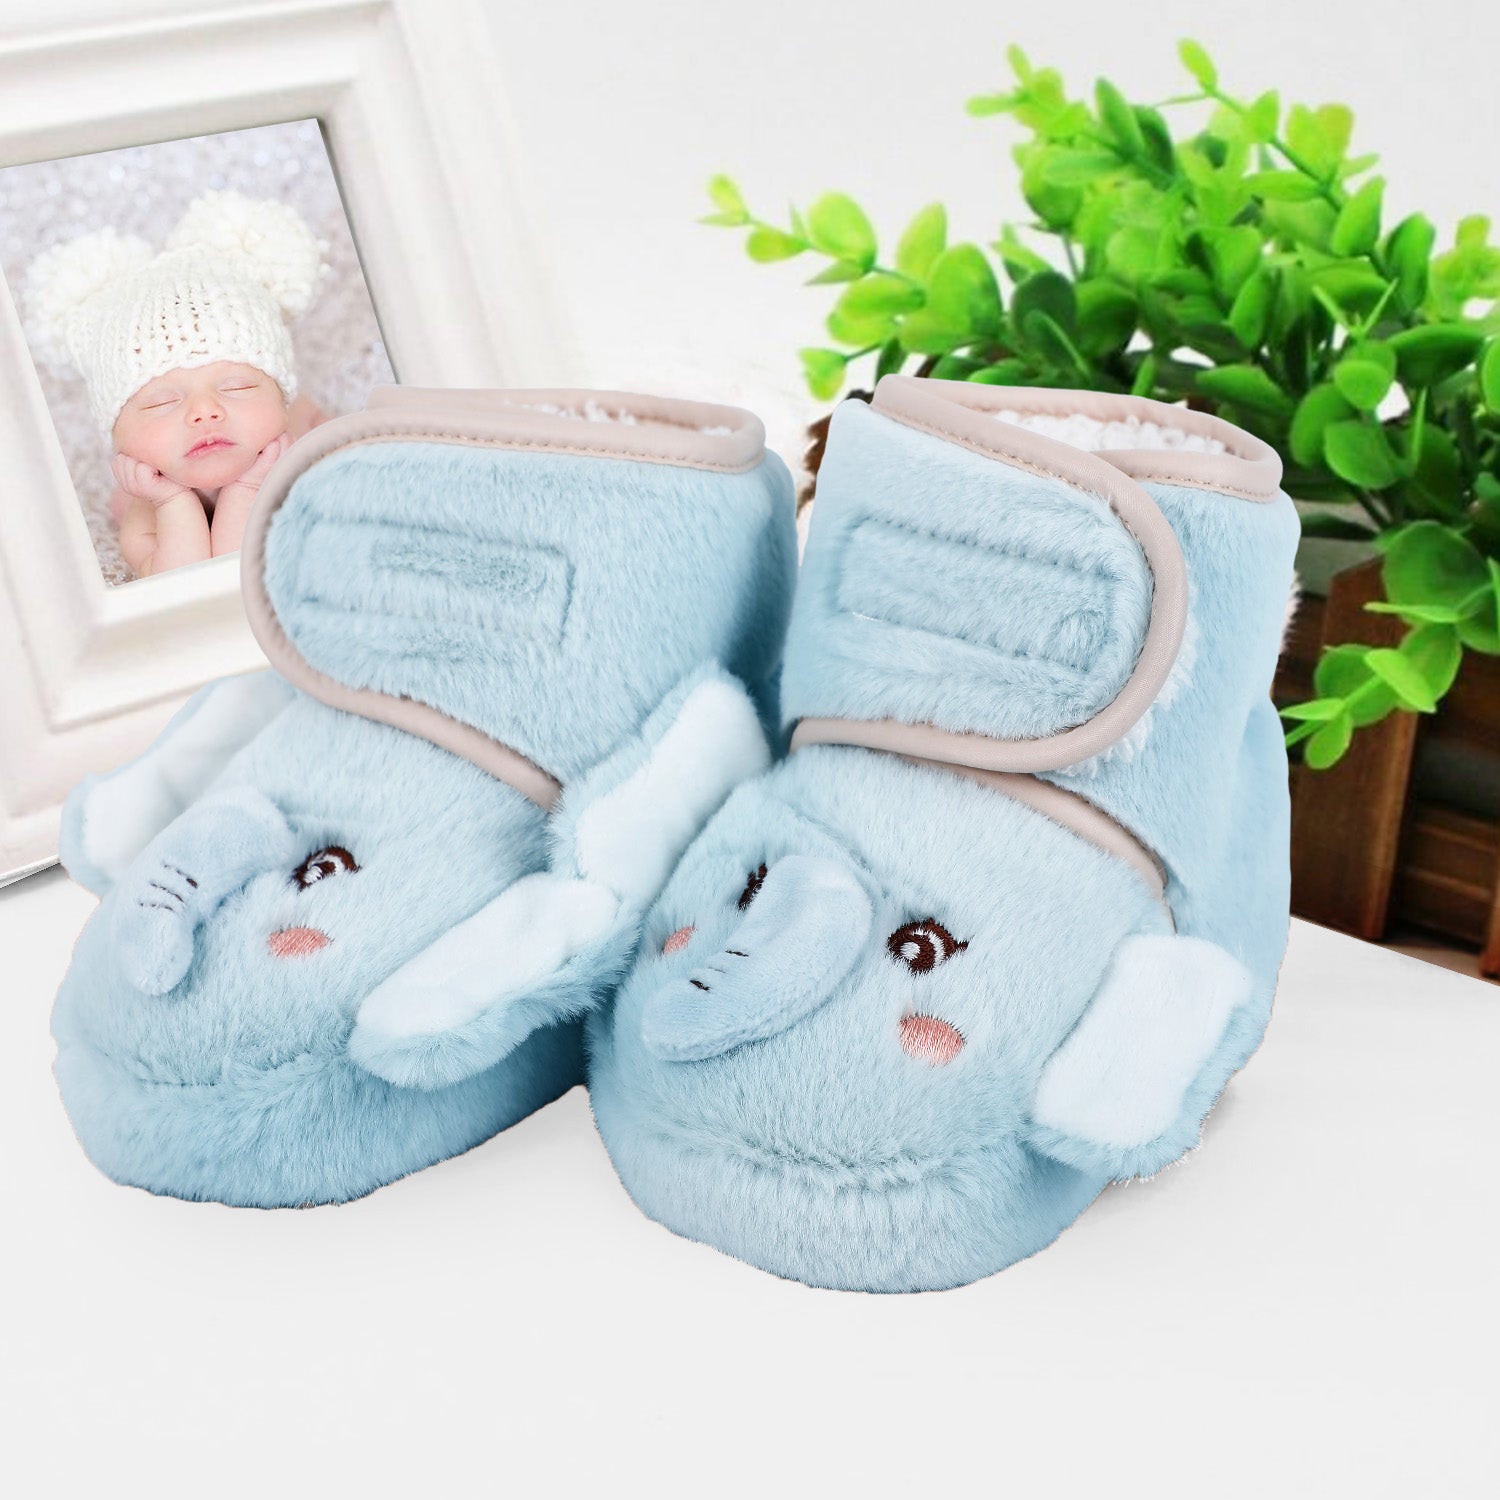 Baby Moo 3D Elephant Cozy Soft Velcro Furry Booties - Sky Blue - Baby Moo